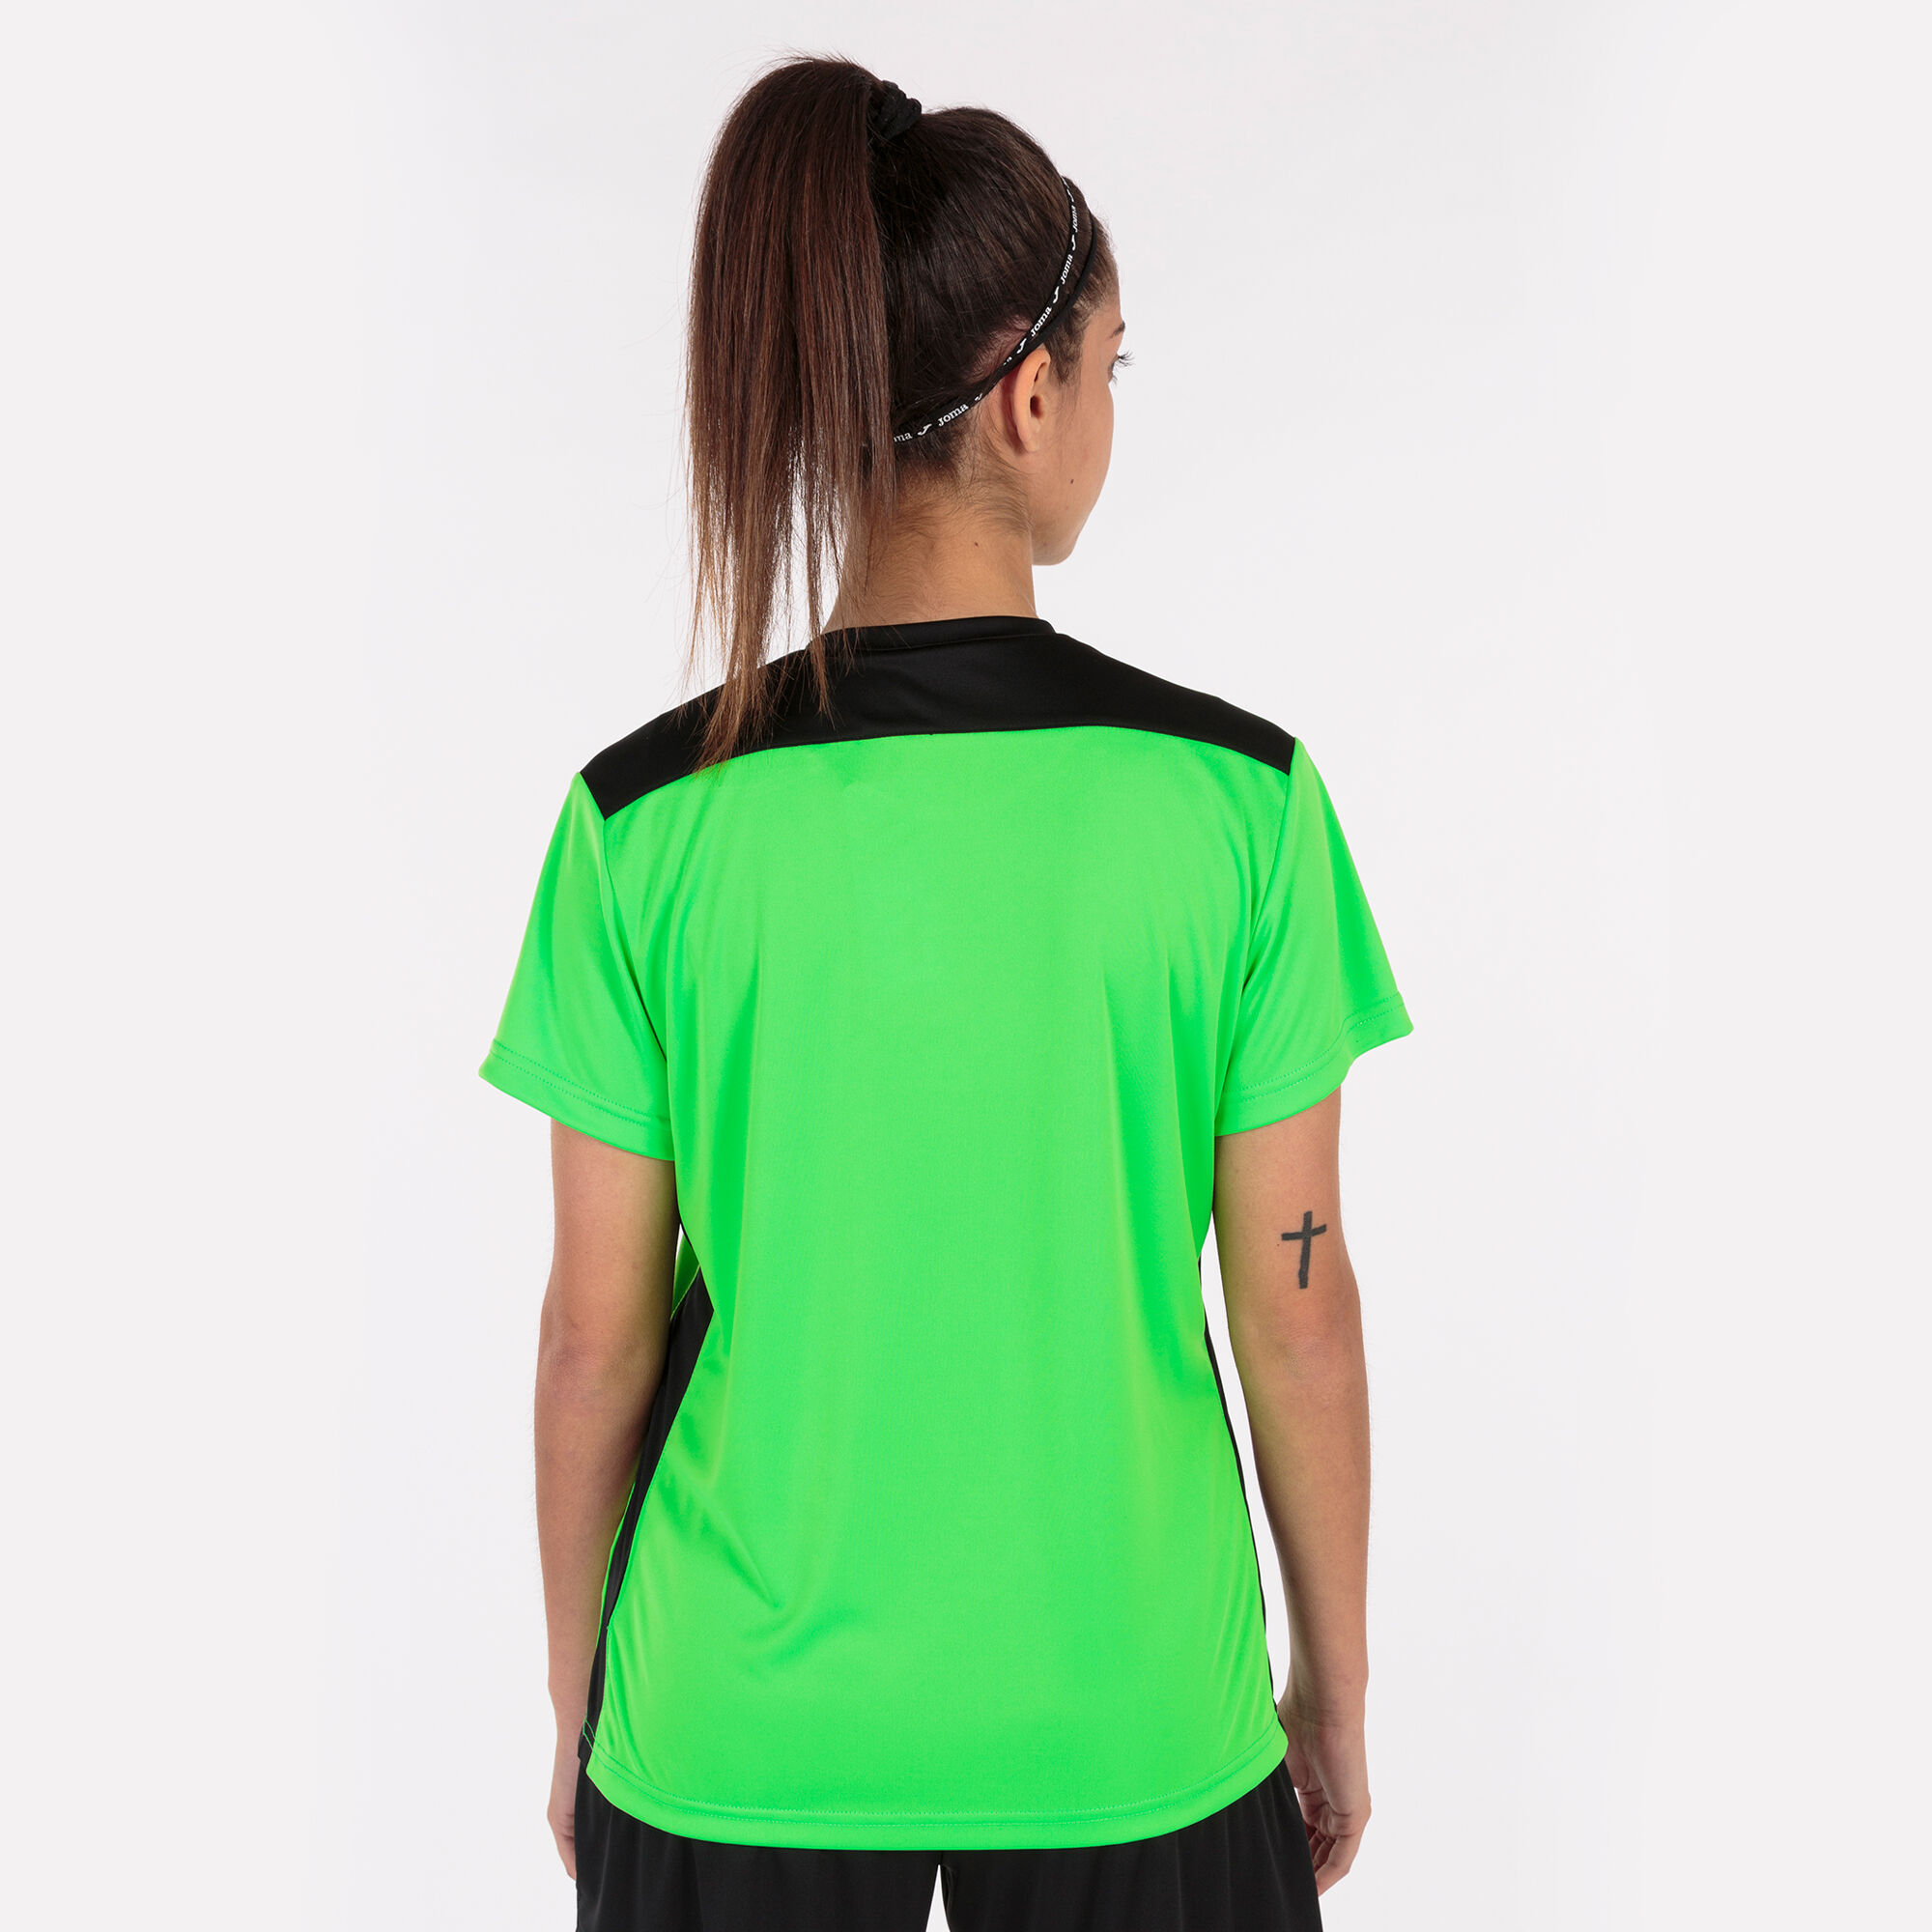 Camiseta manga corta mujer Championship VI verde flúor negro